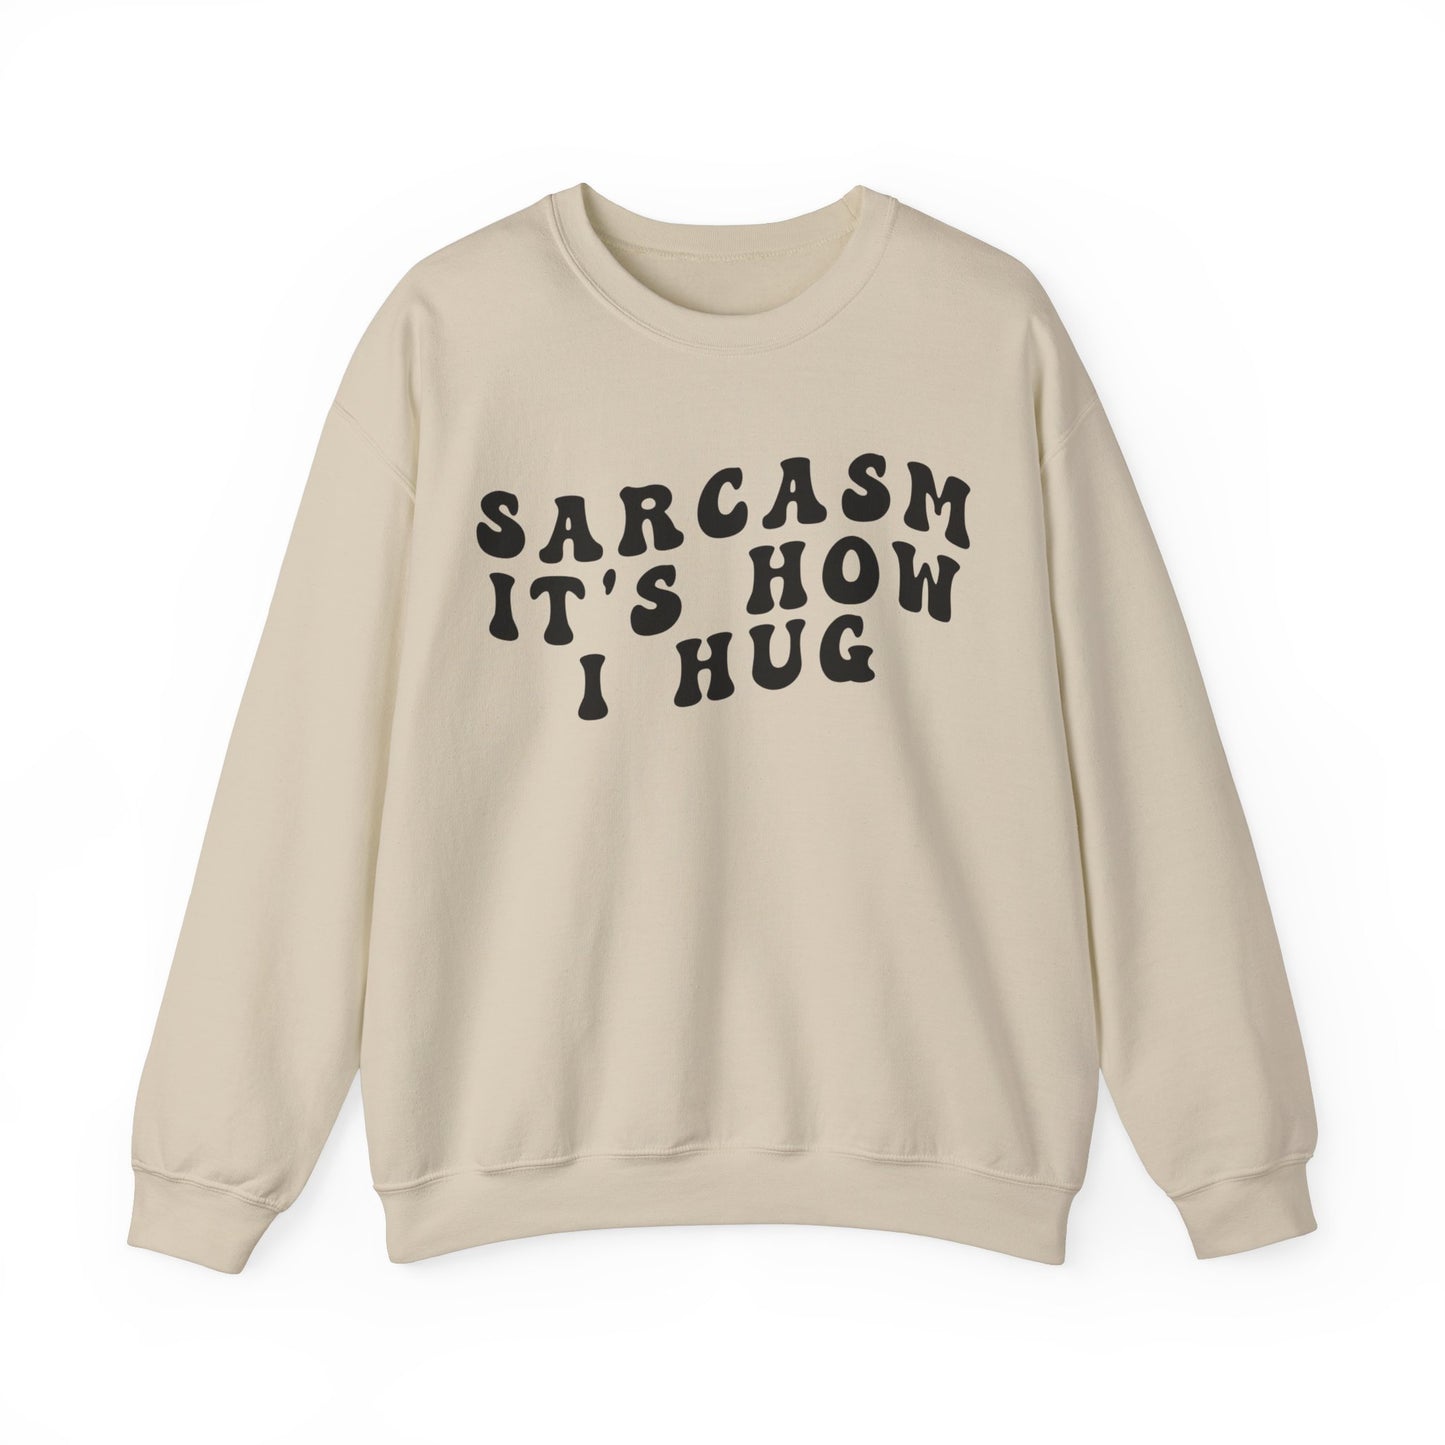 Sarcasm It's How I Hug Sweatshirt, Sarcastic Quote Sweatshirt, Sarcasm Women Sweatshirt, Funny Mom Sweatshirt, Shirt for Women, S1262